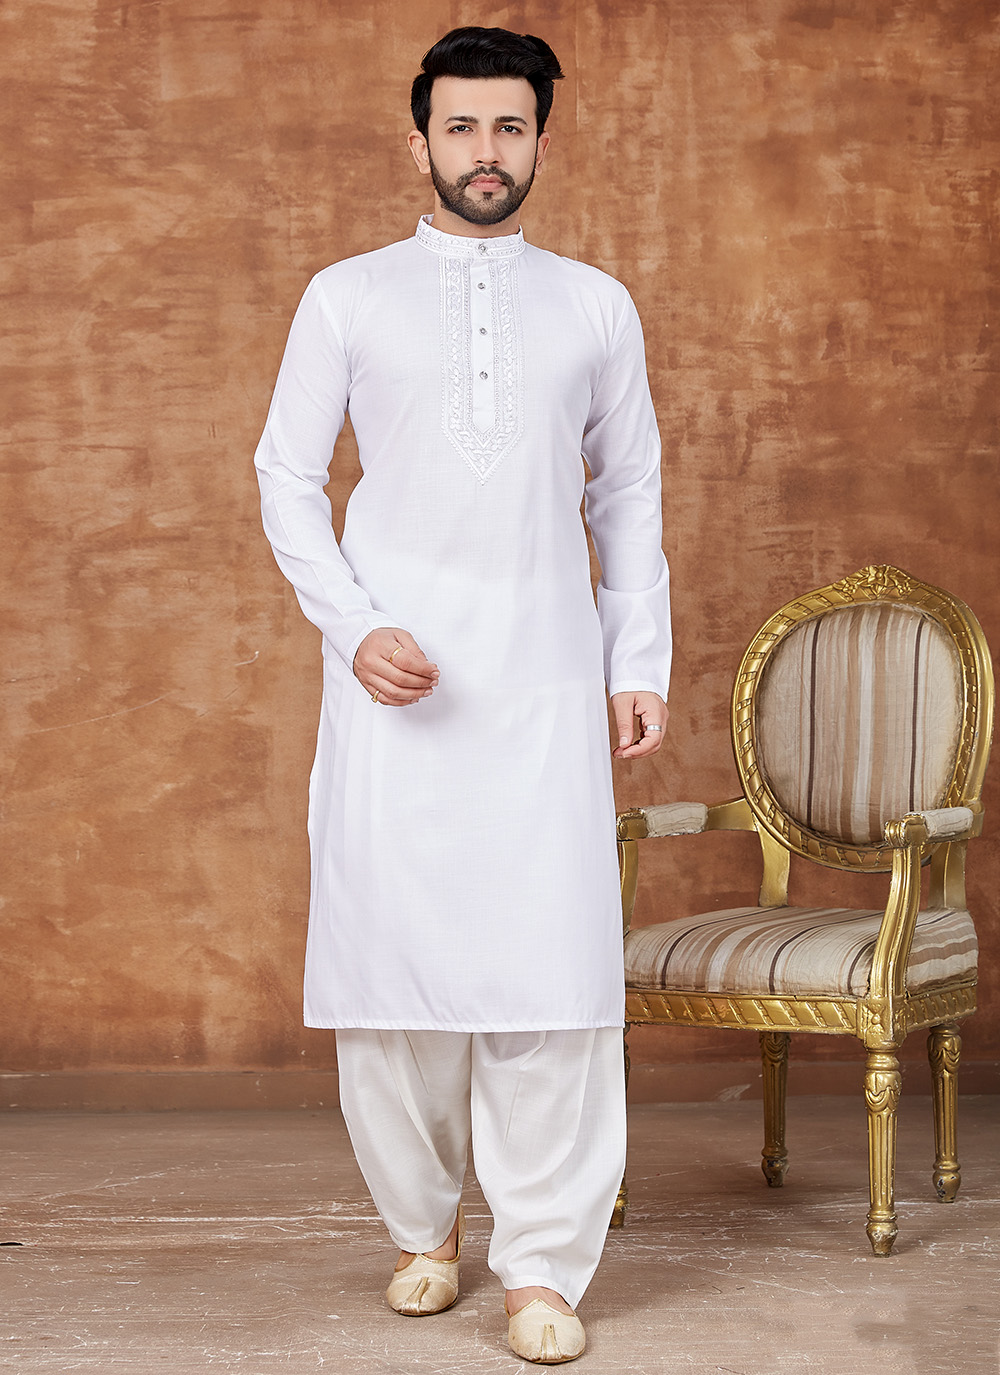 Festive Plain PS151 Men Cotton Pathani Suit at Rs 1500/piece in New Delhi |  ID: 22969120012